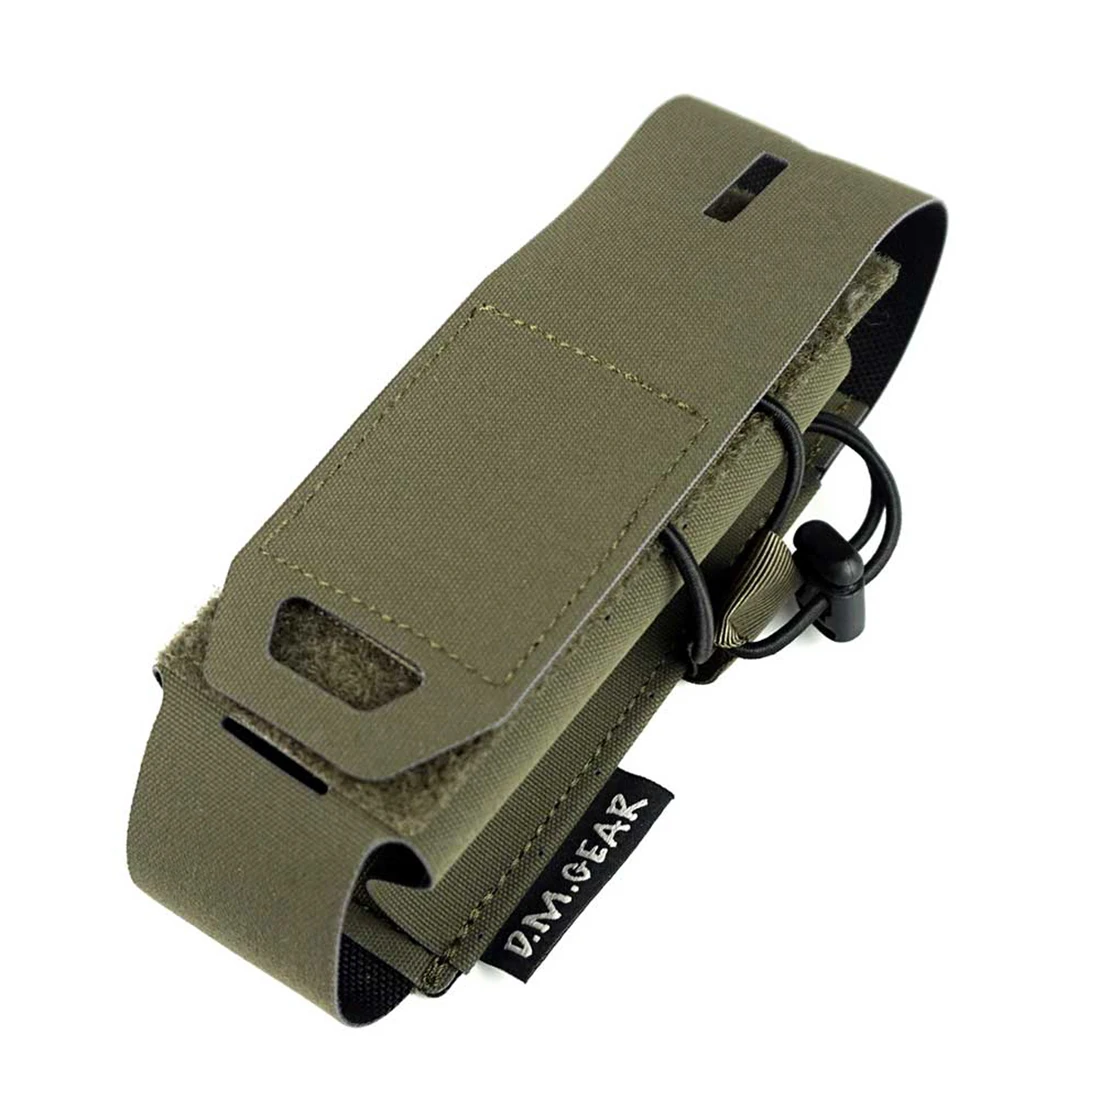 

DMGear 9mm Laser Cutting Tactical Pouch Modular Tool Bag Outdoors Tactics Accessories - (RG MCBK MC ) S Size